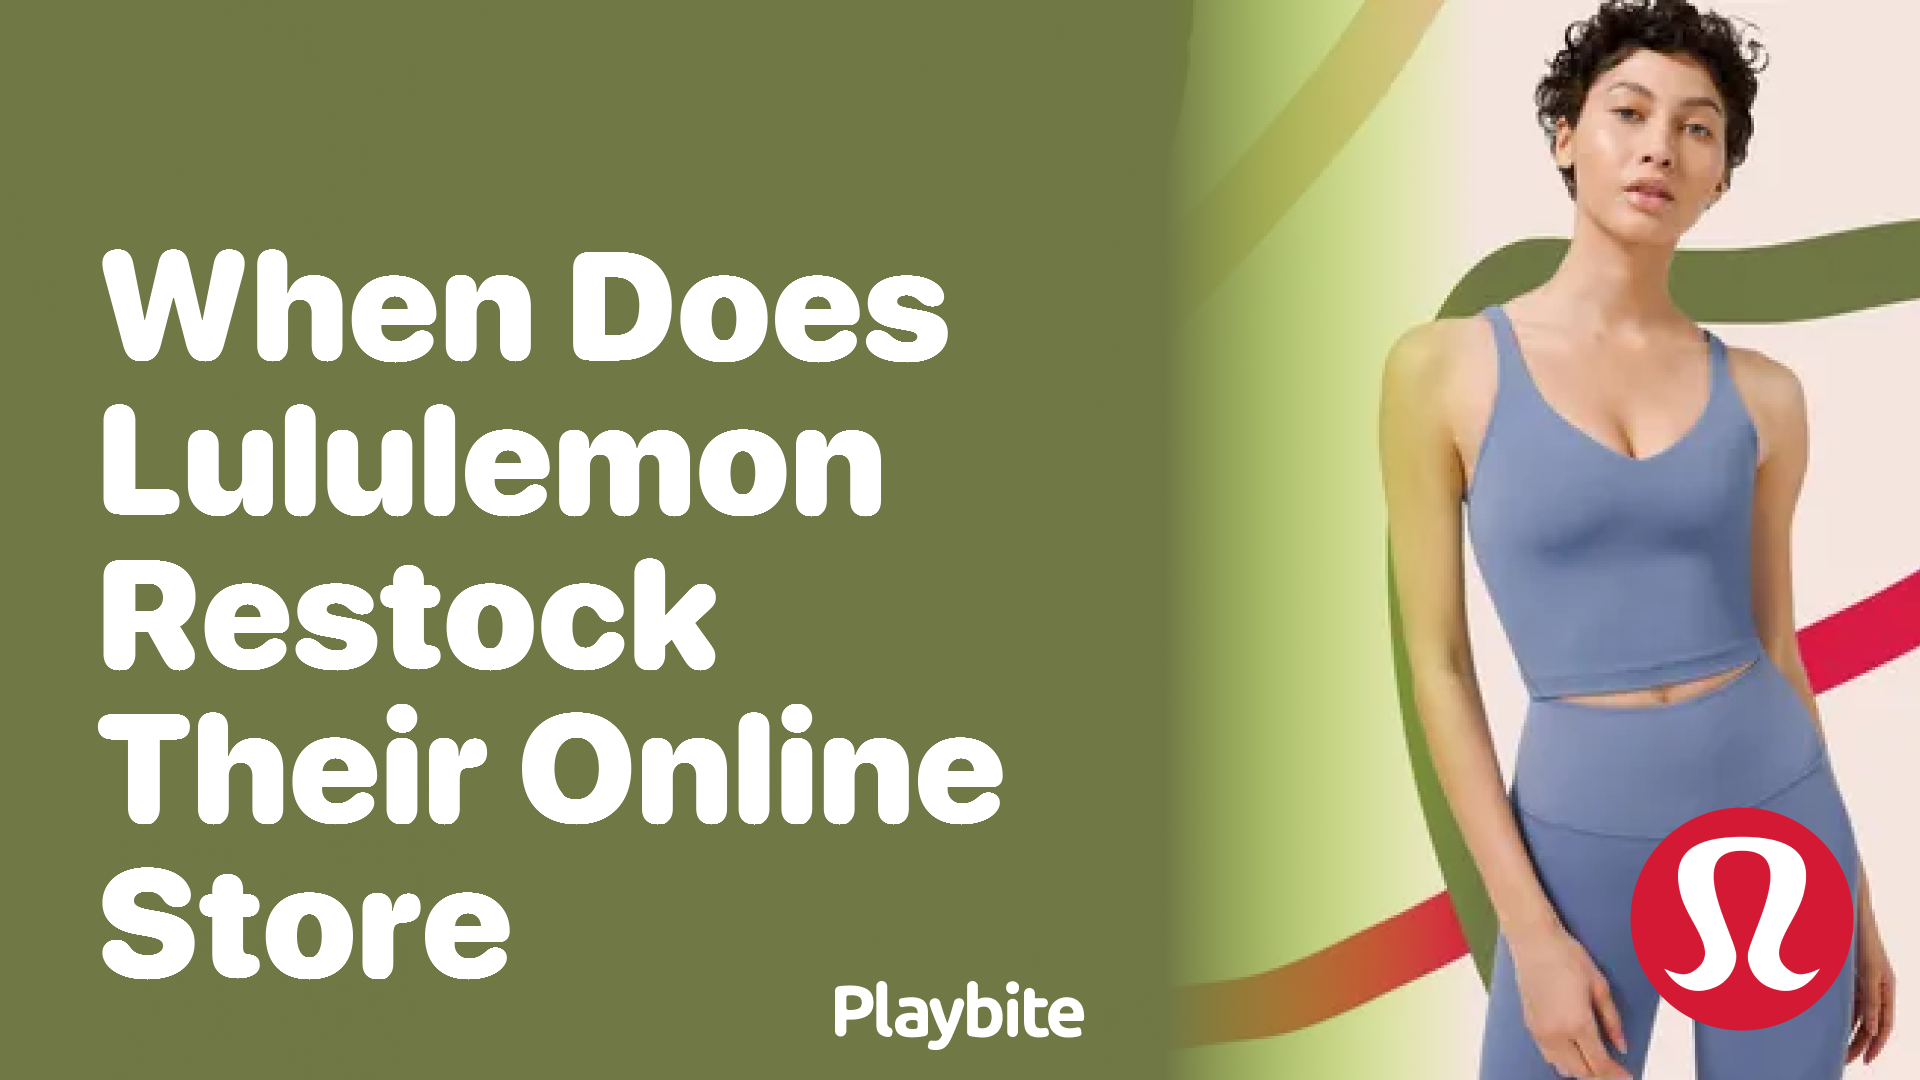 When Does Lululemon Restock Their Online Store? - Playbite